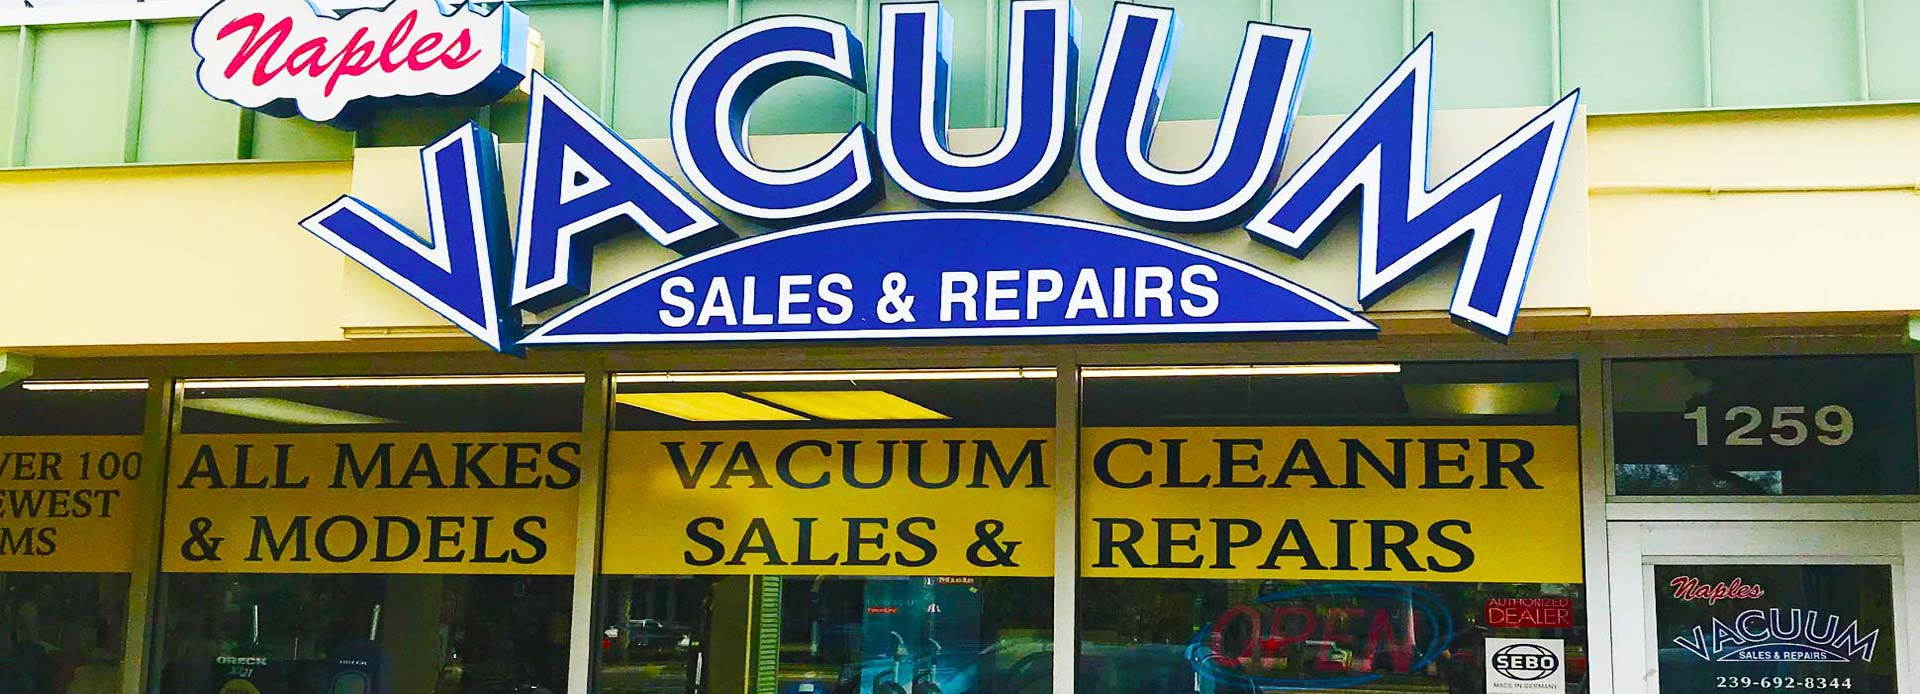 Naples Vacuum Sales & Repair Banner